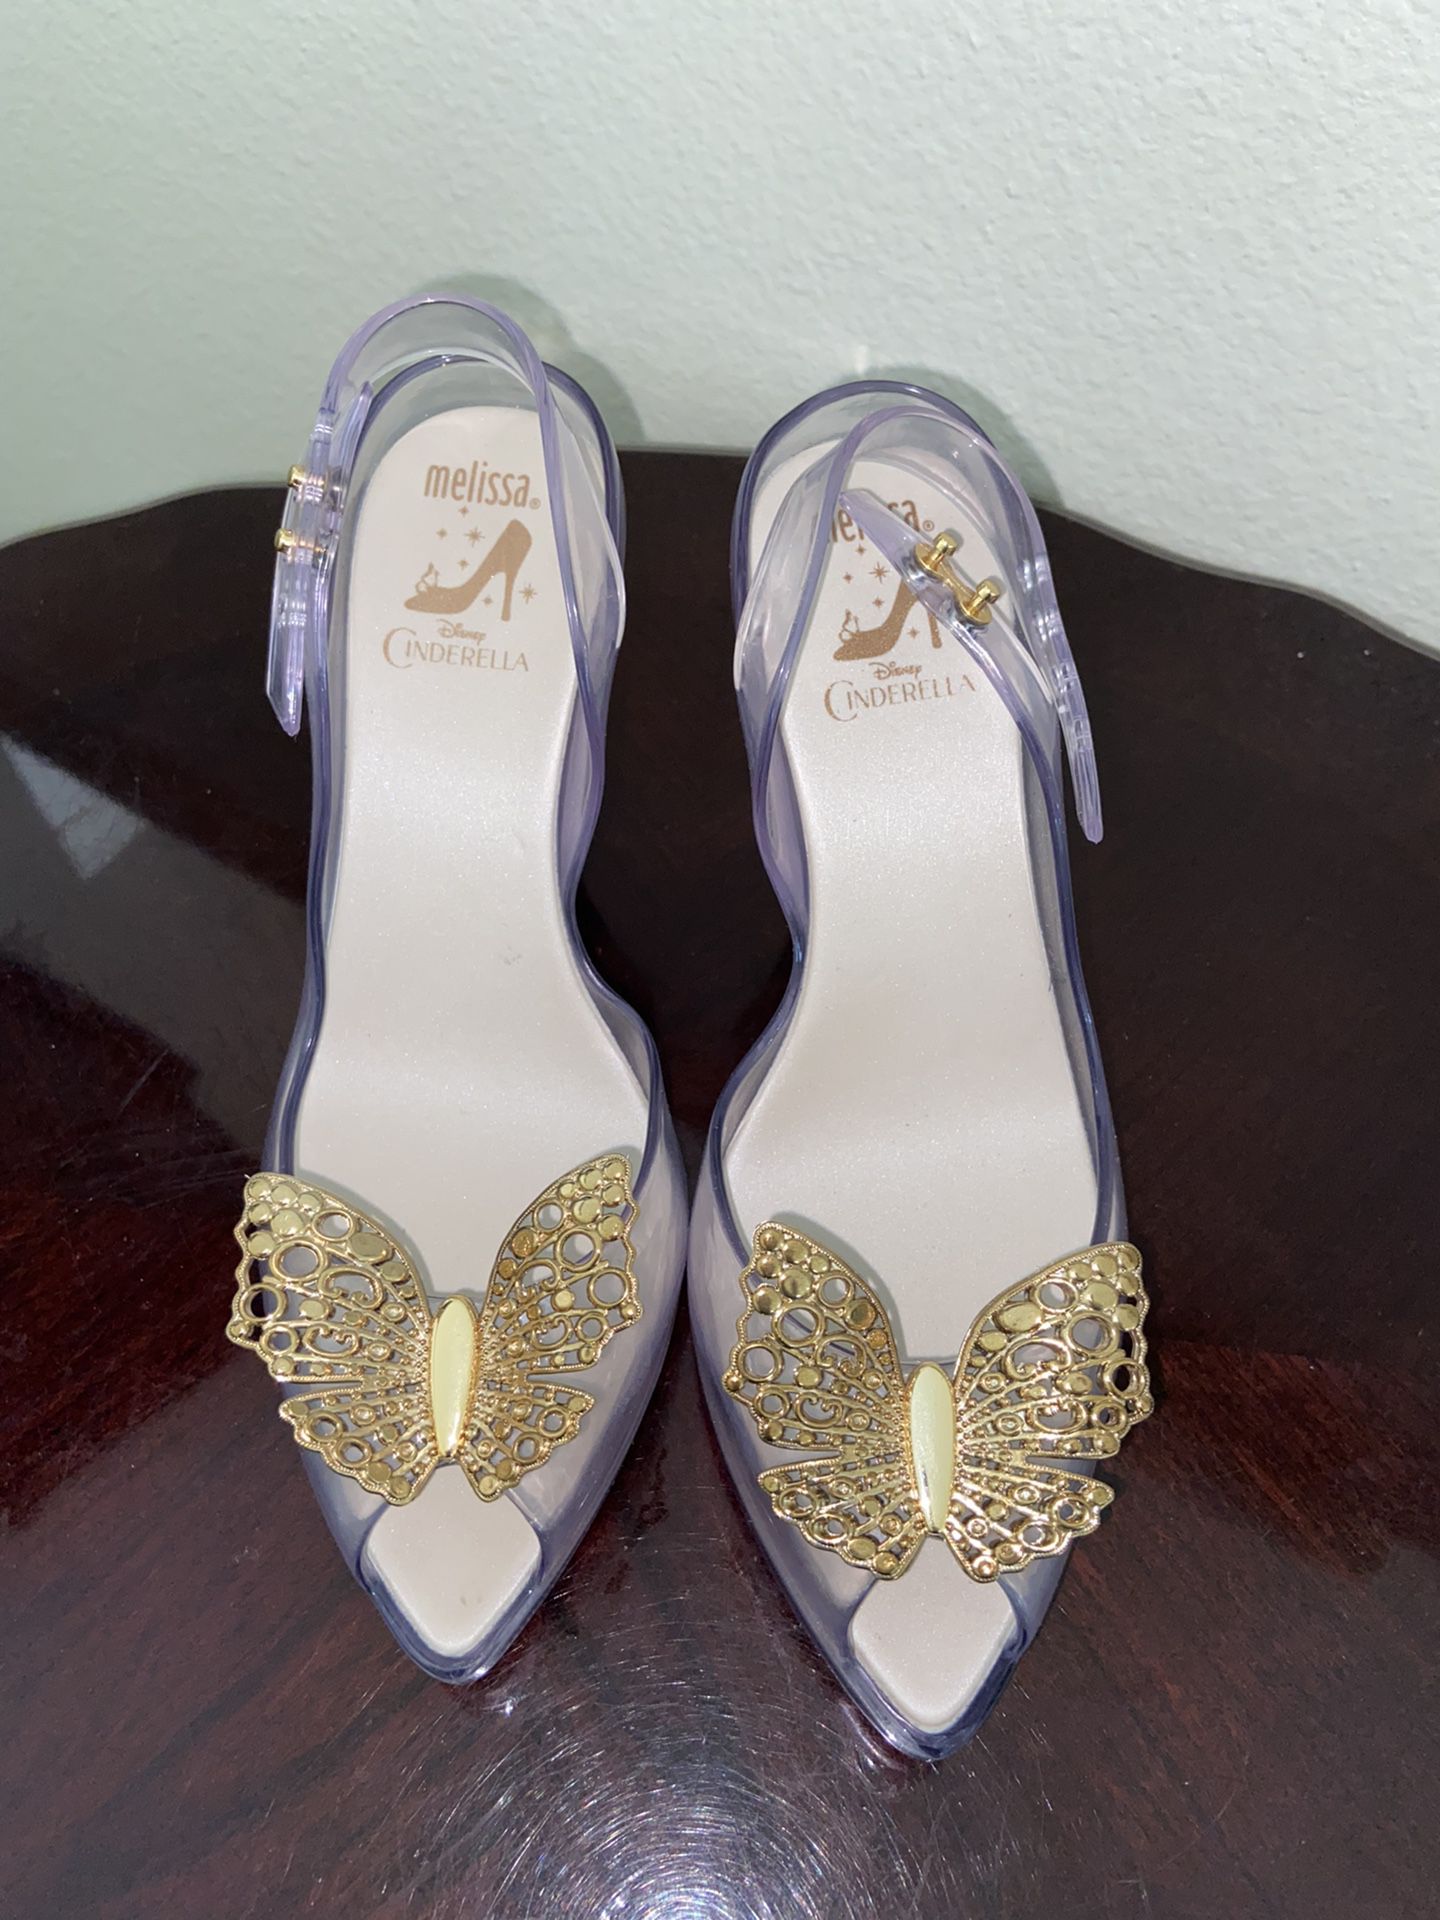 Melissa Shoes x Disney Cinderella Heels (Size6)